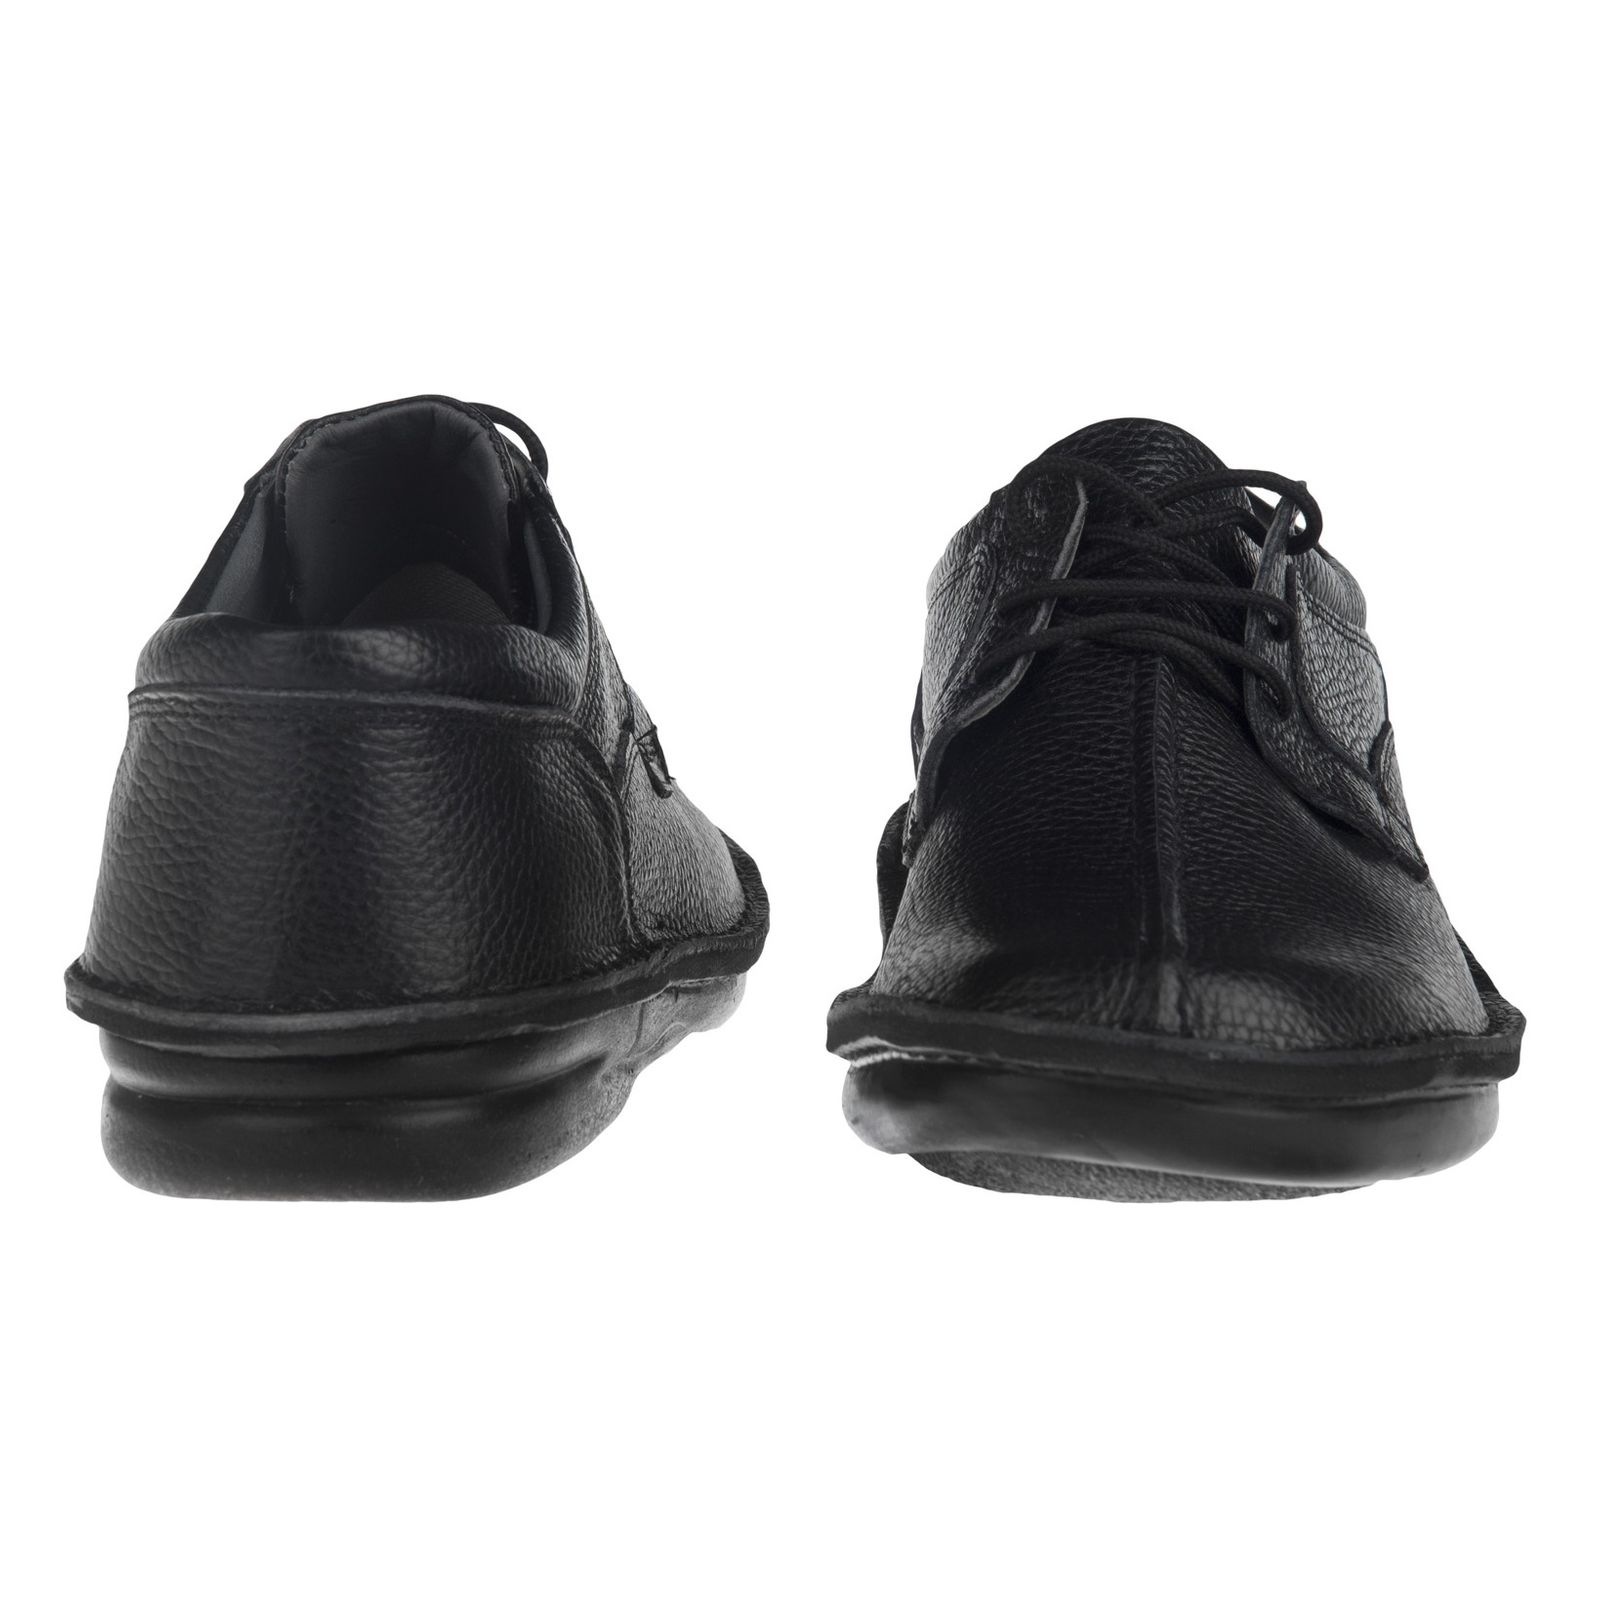 کفش روزمره مردانه بلوط مدل 7011T503-101 - مشکی - 5